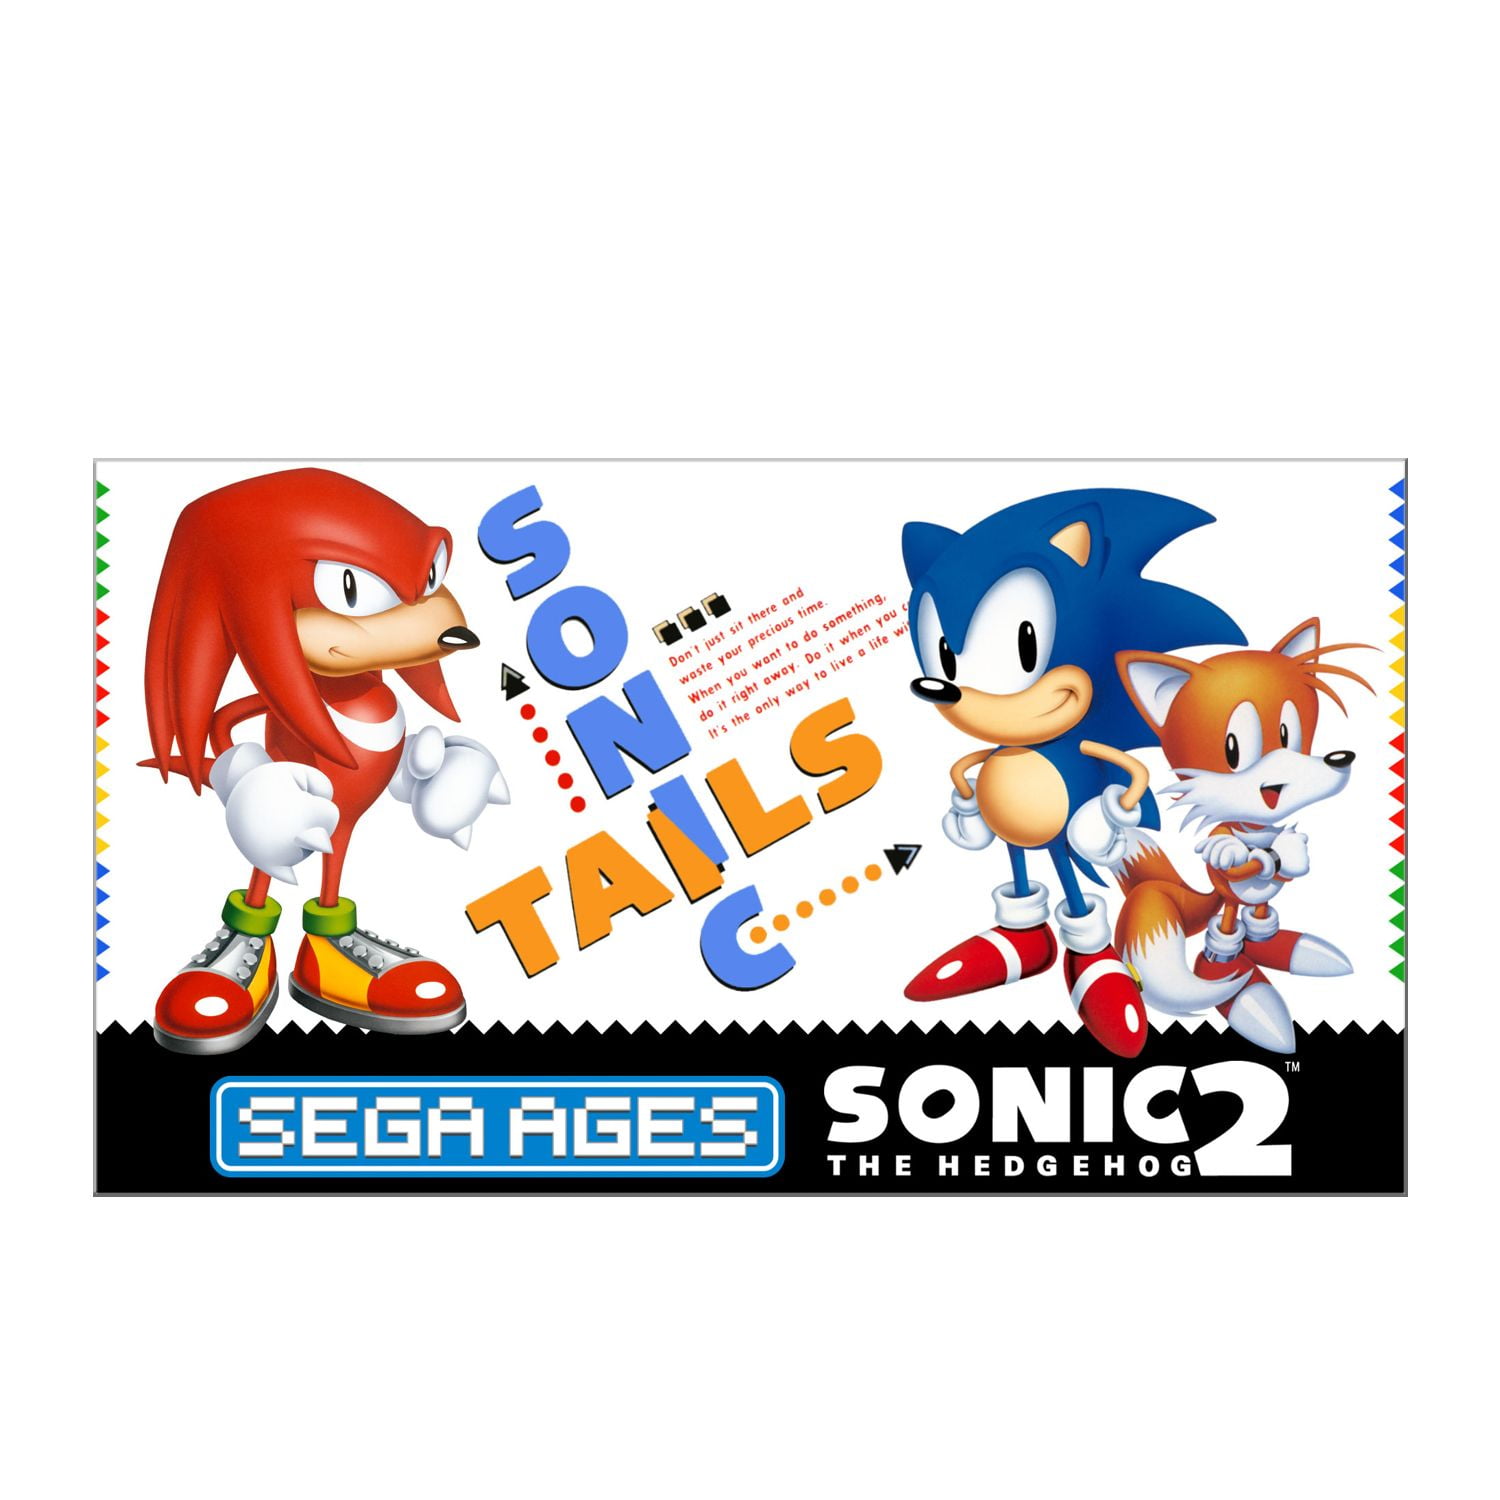 Sonic the Hedgehog 2 Sega. Sonic the Hedgehog NES. Sonic age. Nintendo Switch &Sega.